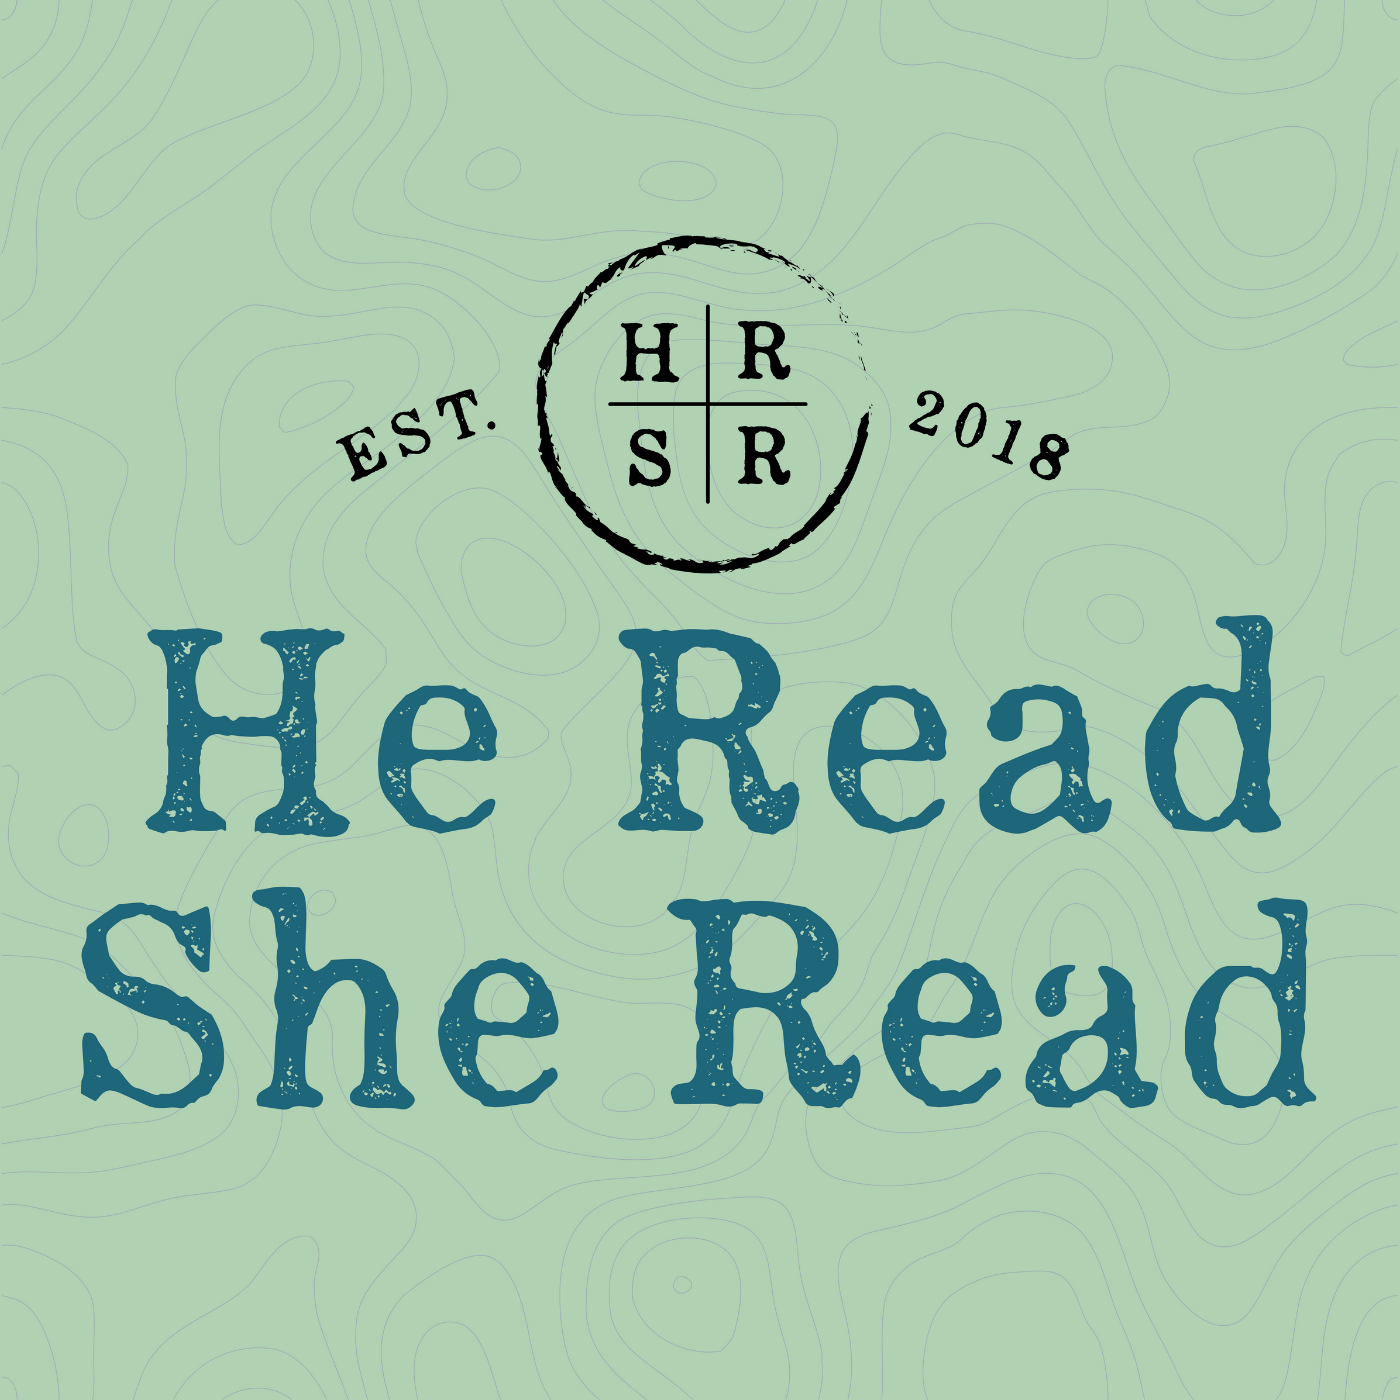 I read she. She reads. She is read. He reads books в сокращенной форме. You read-she.